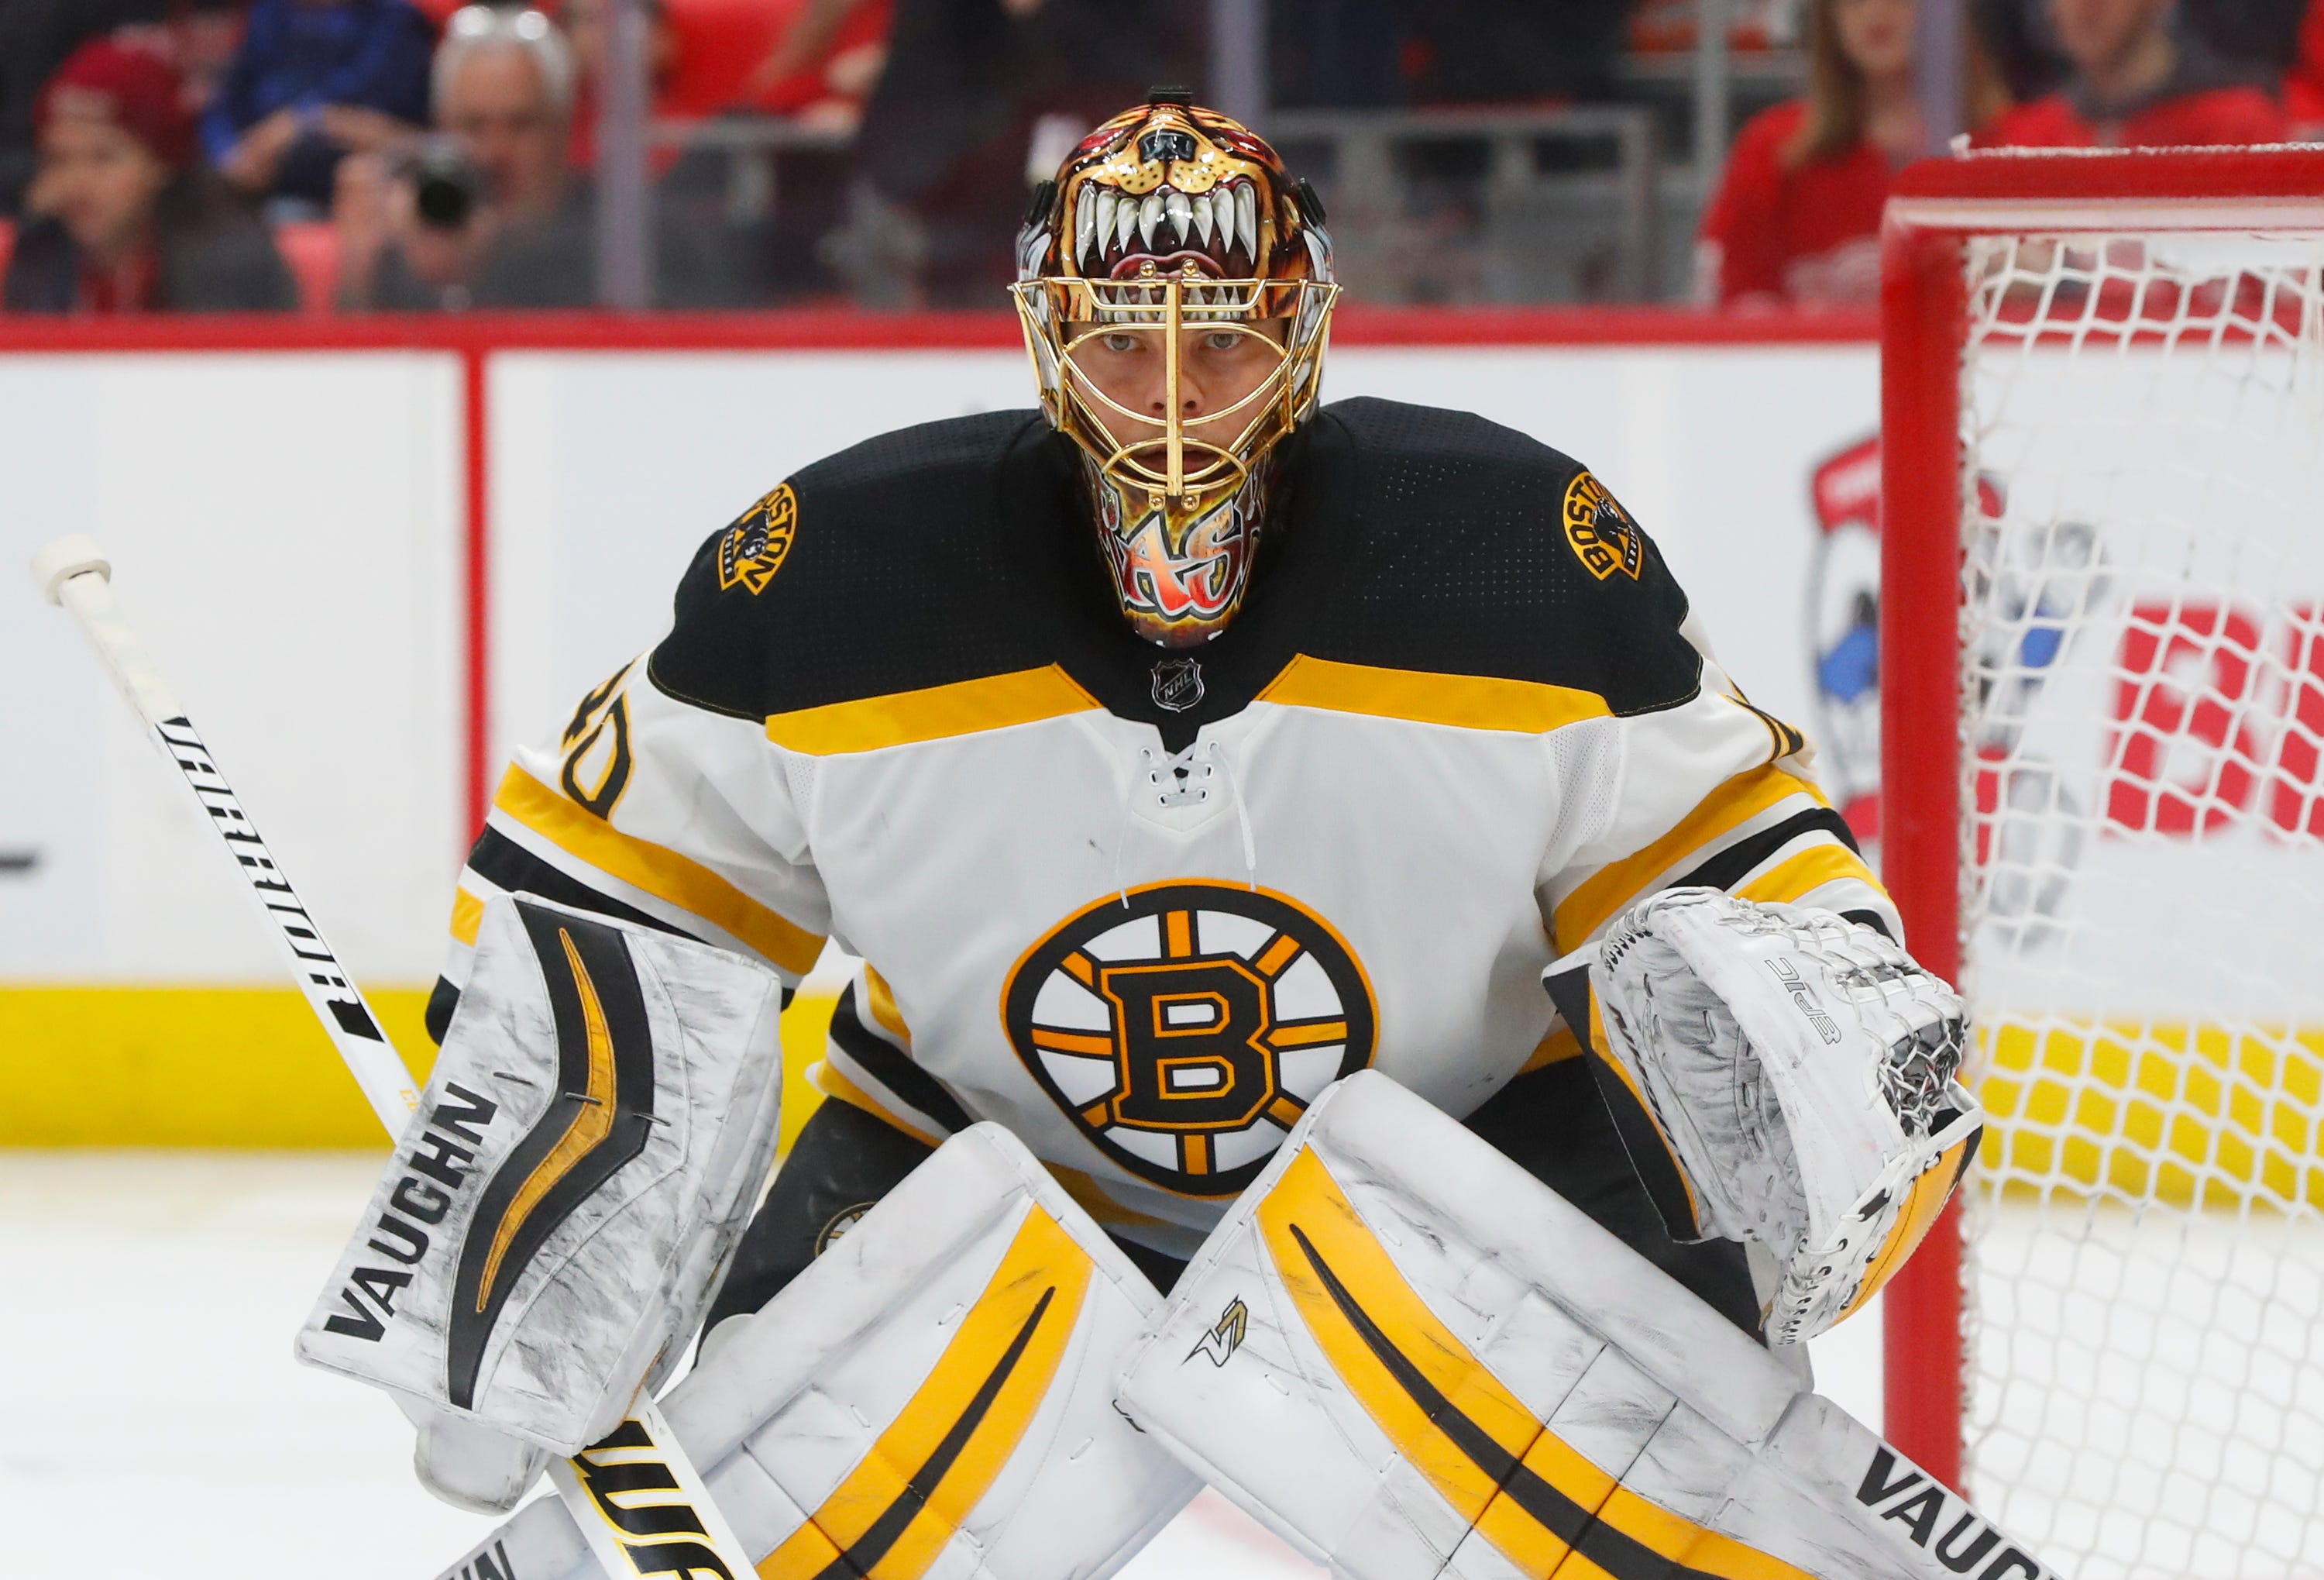 Bruins goaltender Tuukka Rask returns to practice after three-day personal leave